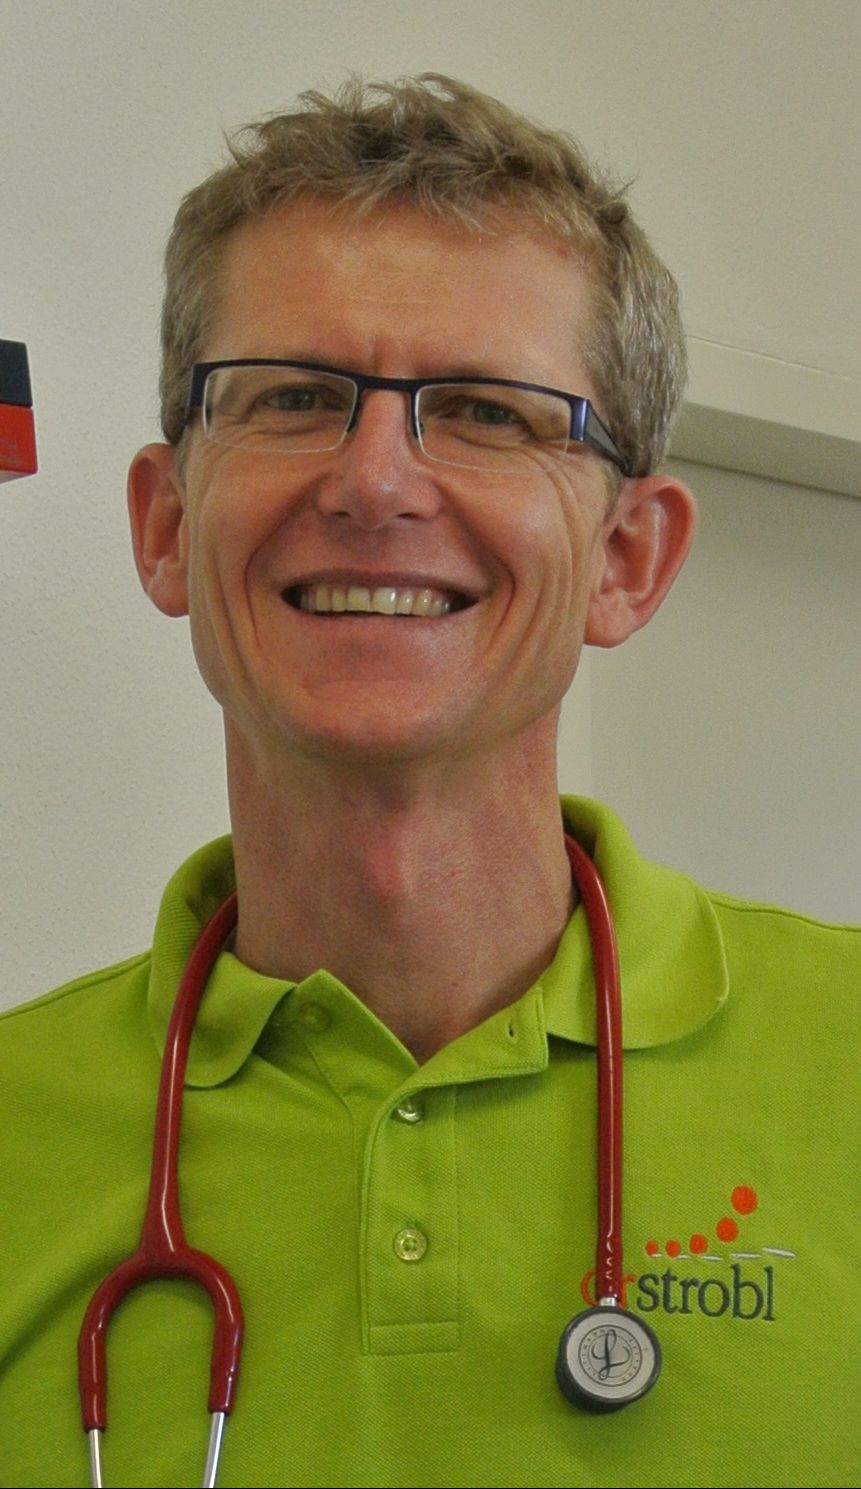 Dr. Johannes Strobl